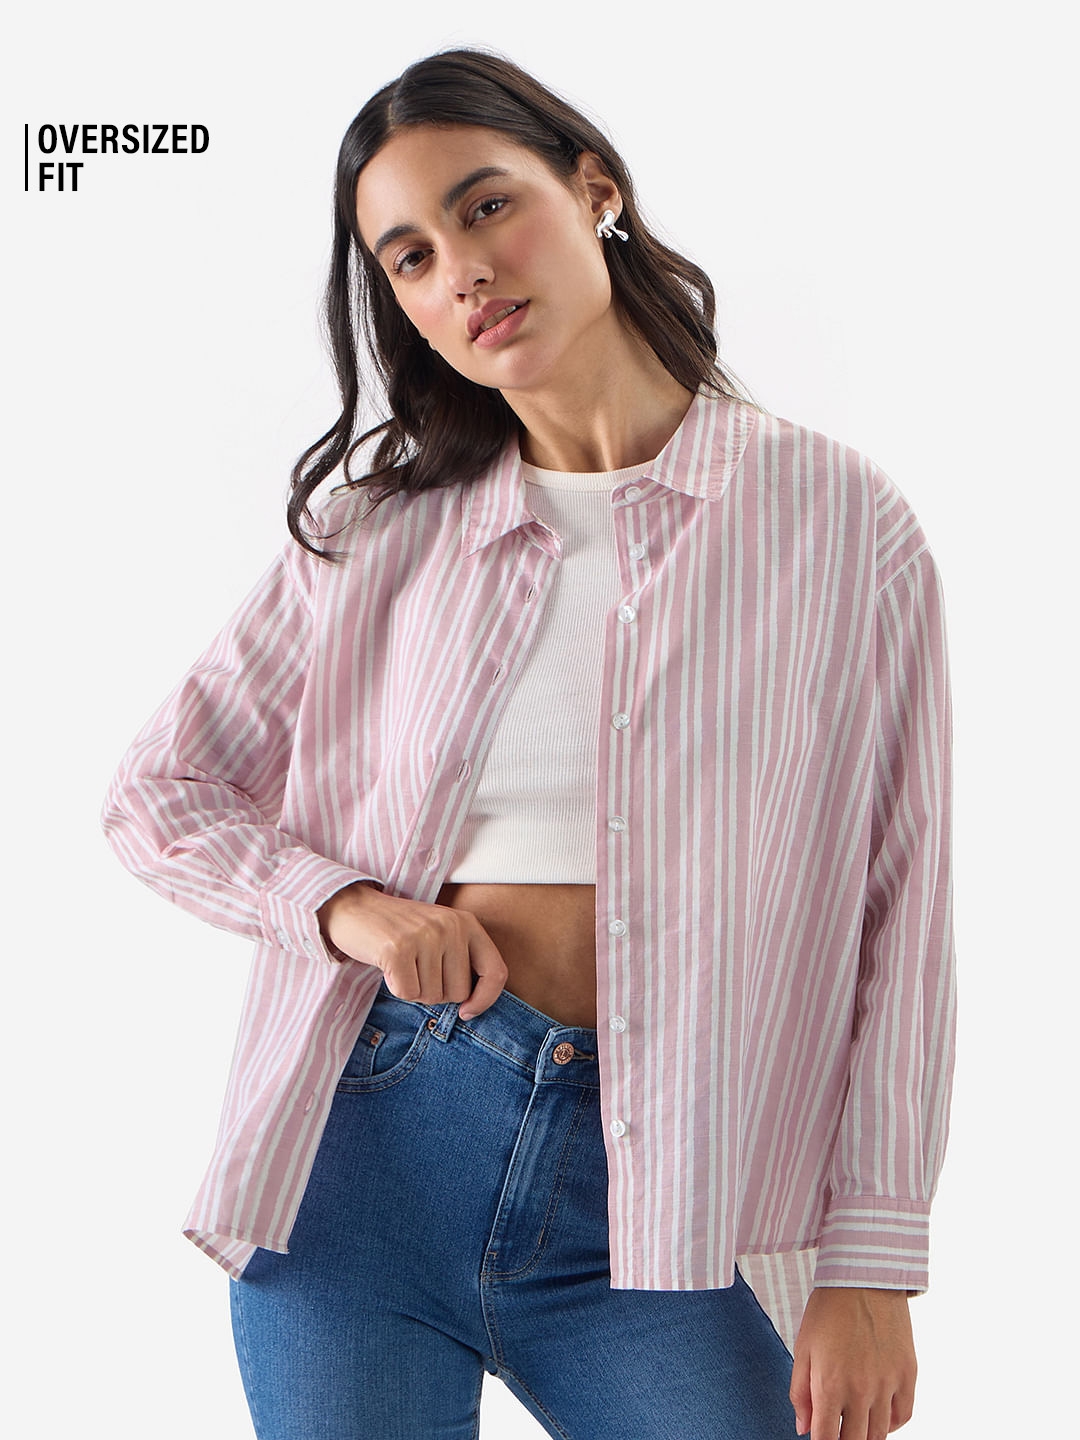 The Souled Store | Women's Solids: Coral Stripes Women's Boyfriend Shirts